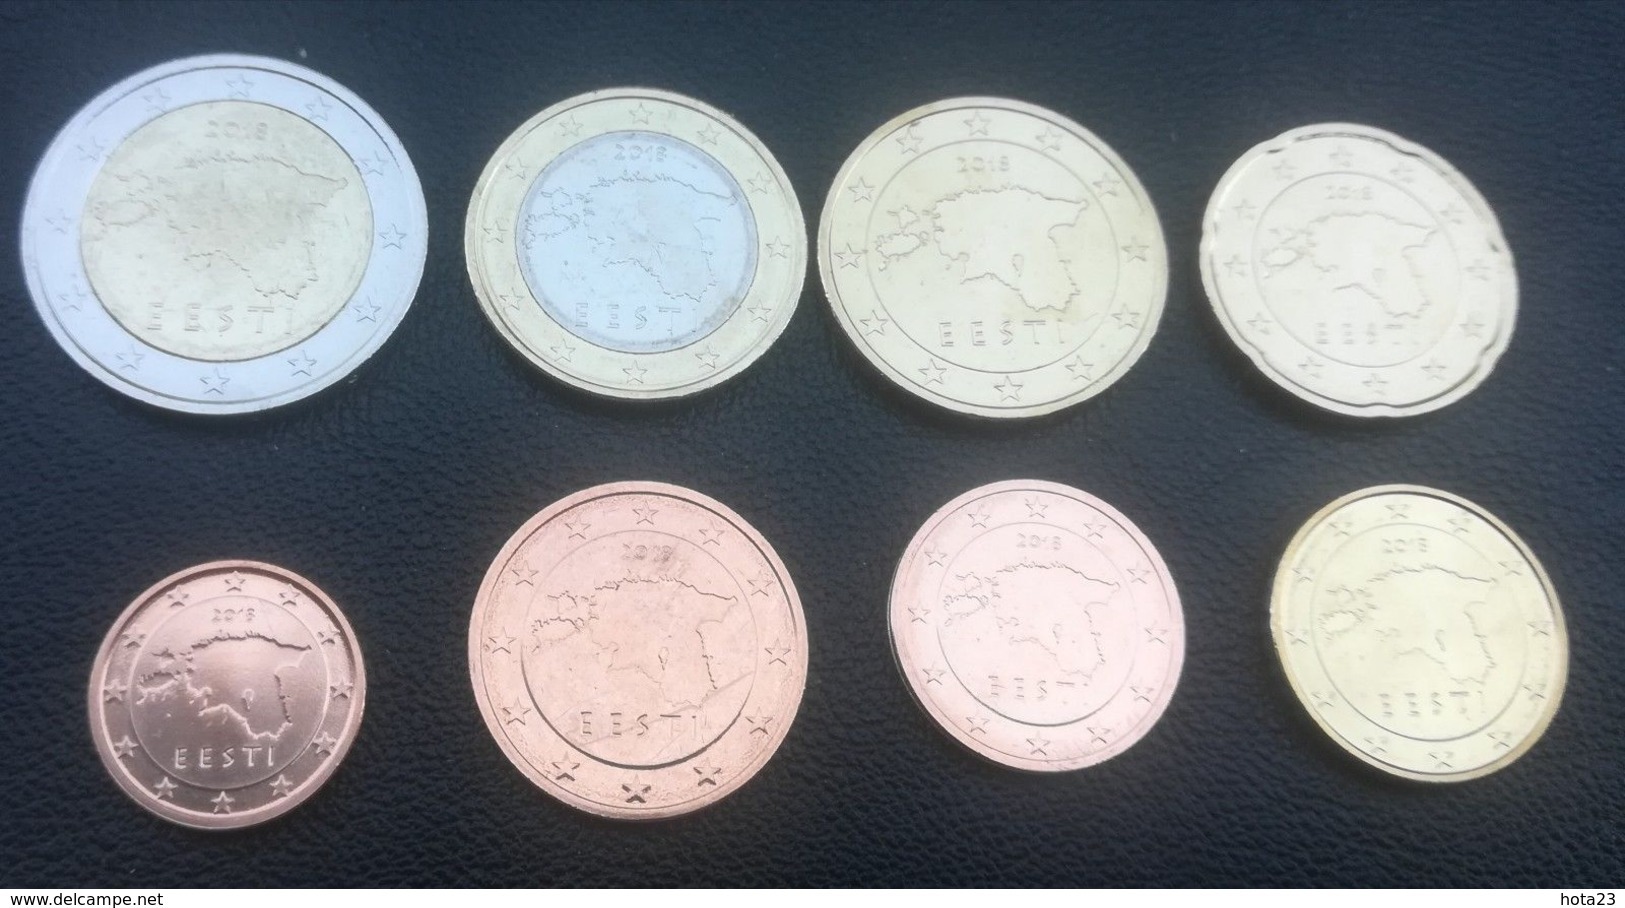 NEU 2018 Jahr Estland Kms 1 Cent - 2 Euro 3,88 Euro Unc From Mint Roll - Estland